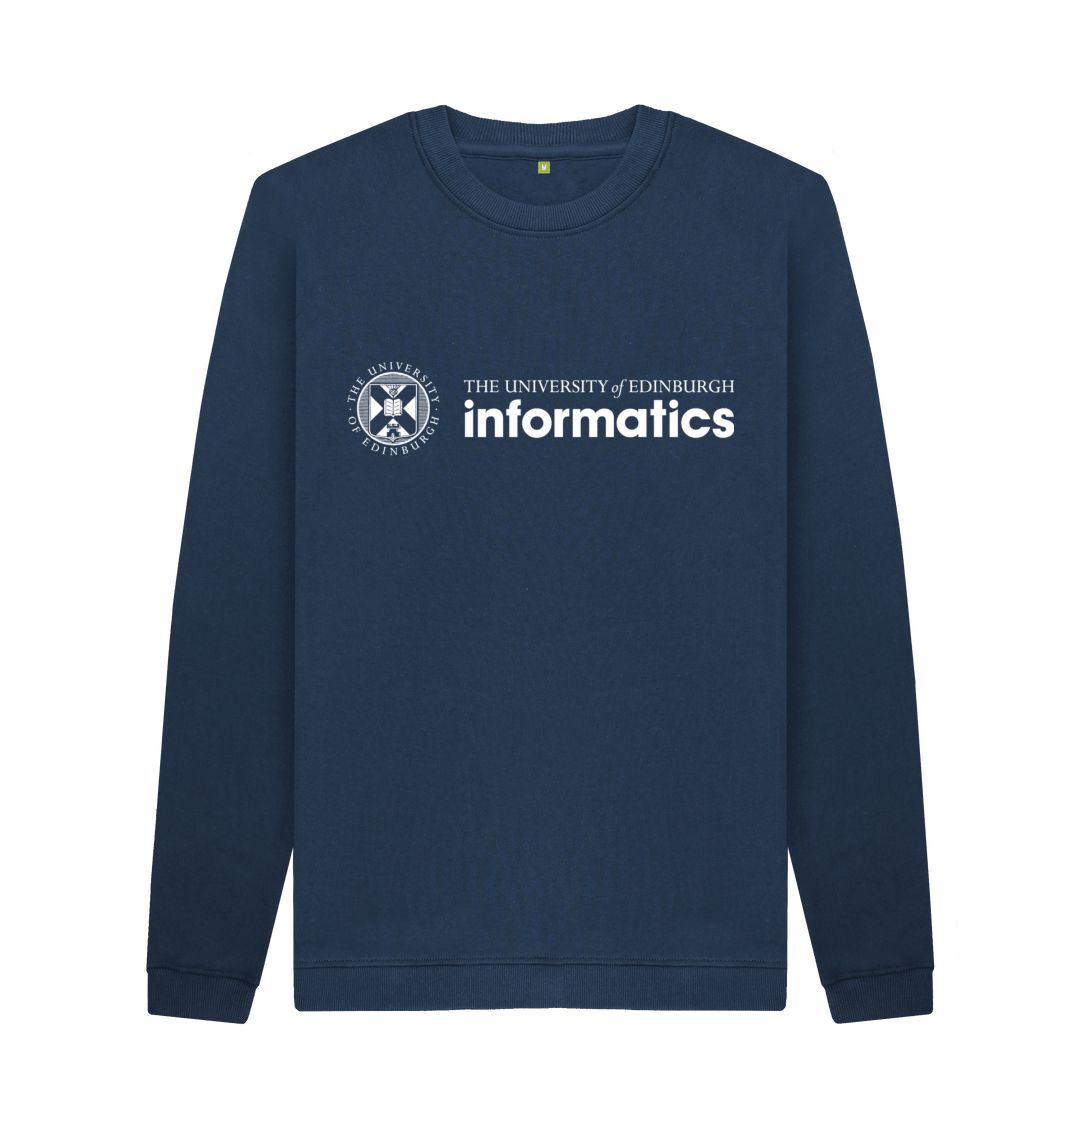 Navy sweatshirt with white University crest and text that reads ' University of Edinburgh: Informatics'